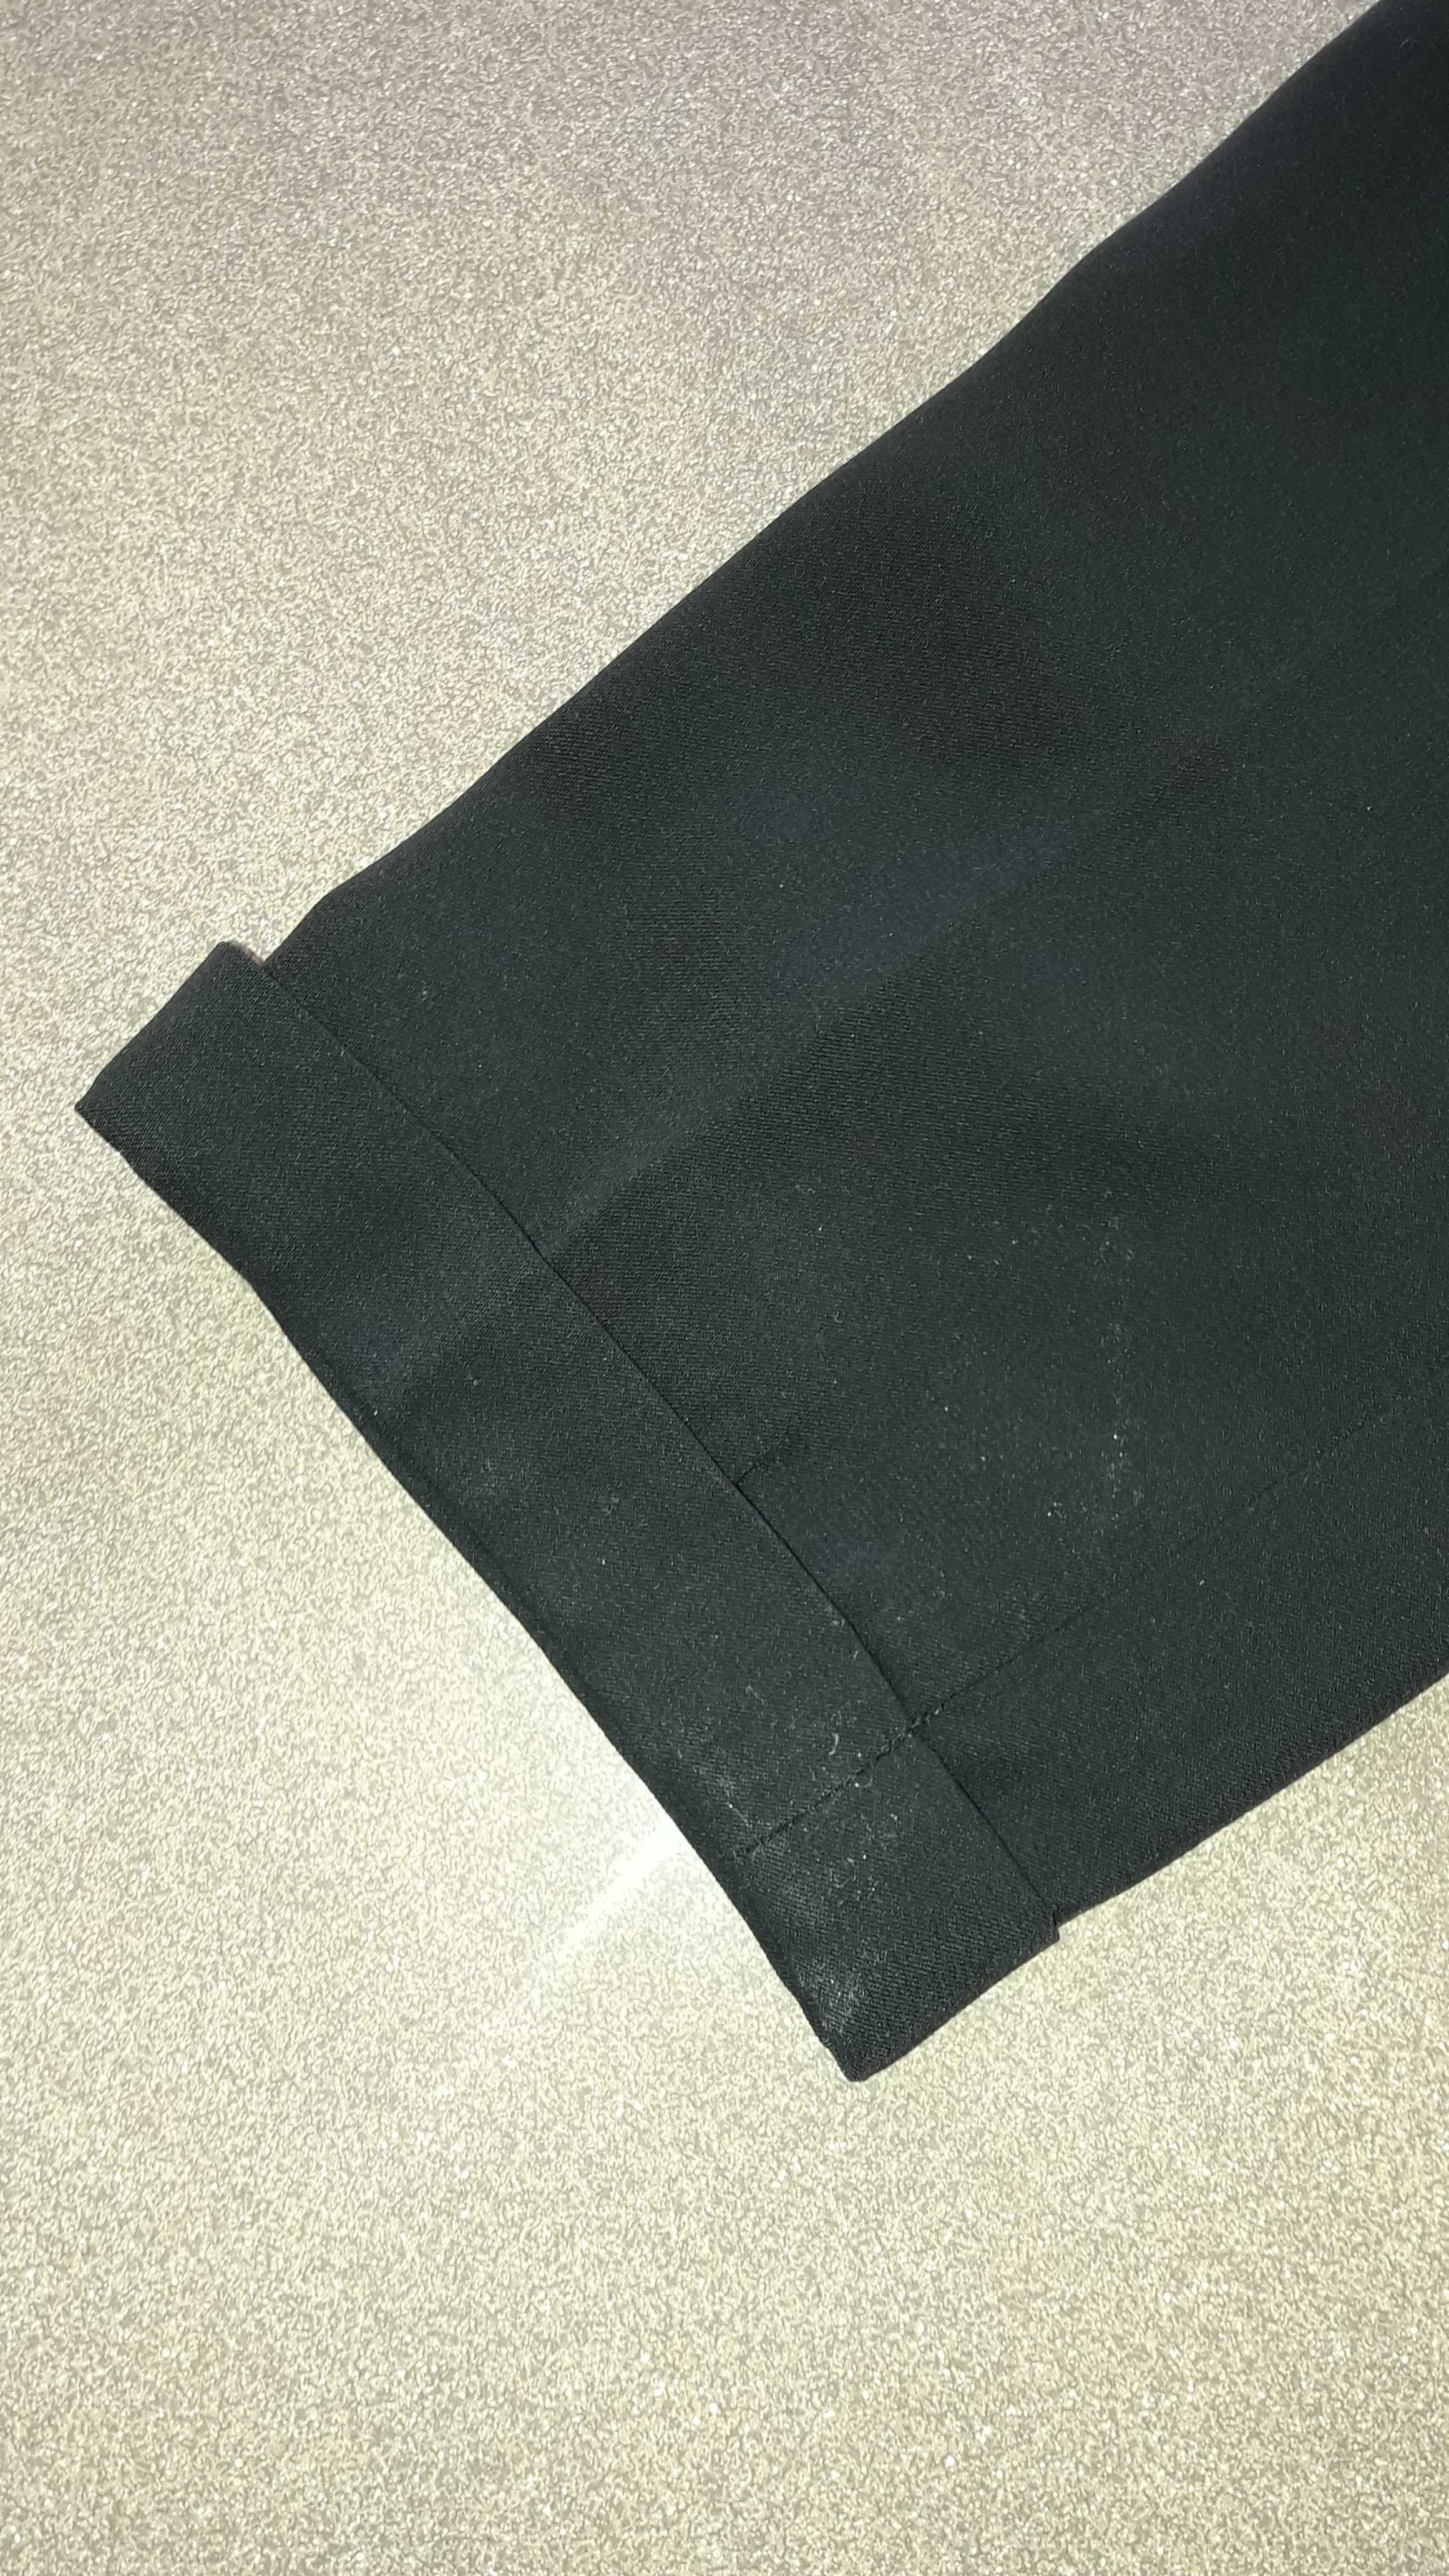 Spodnie cygaretki czarne 36 riserved